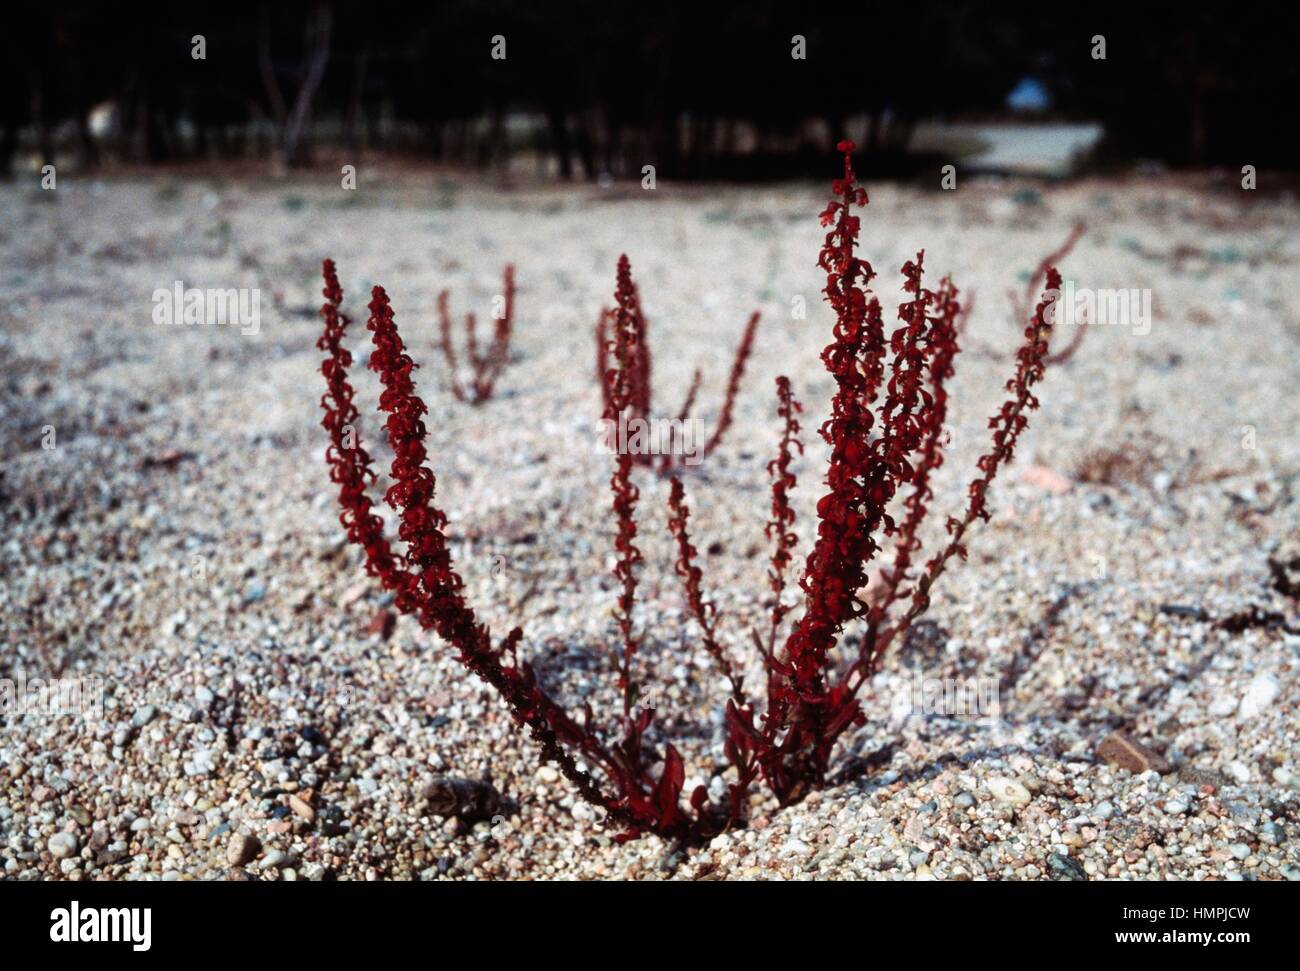 Red dock (Rumex bucephalophorus), Polygonaceae. Stock Photo